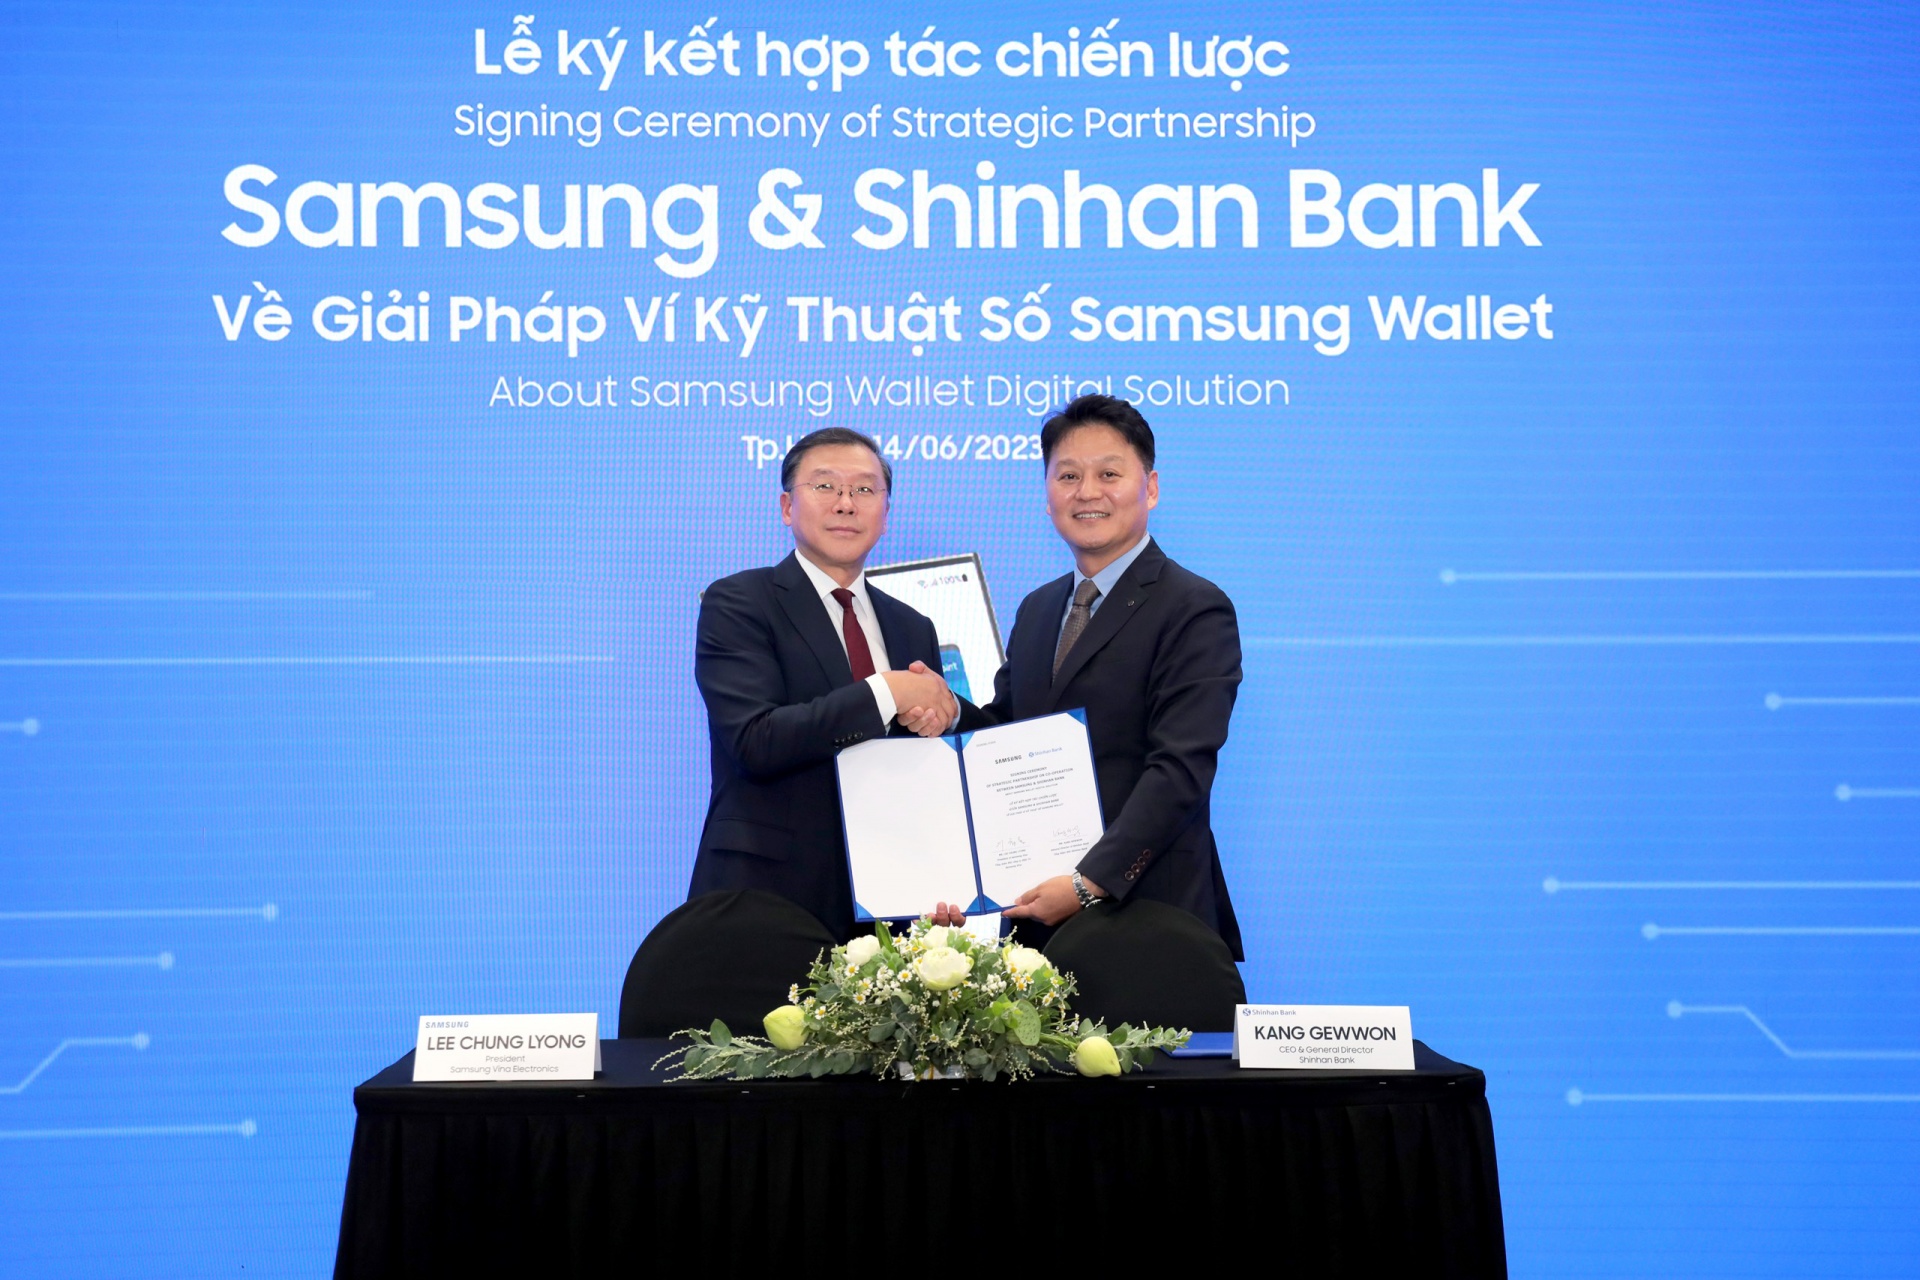 Samsung Vietnam teams up with Shinhan Bank Vietnam on digital payments